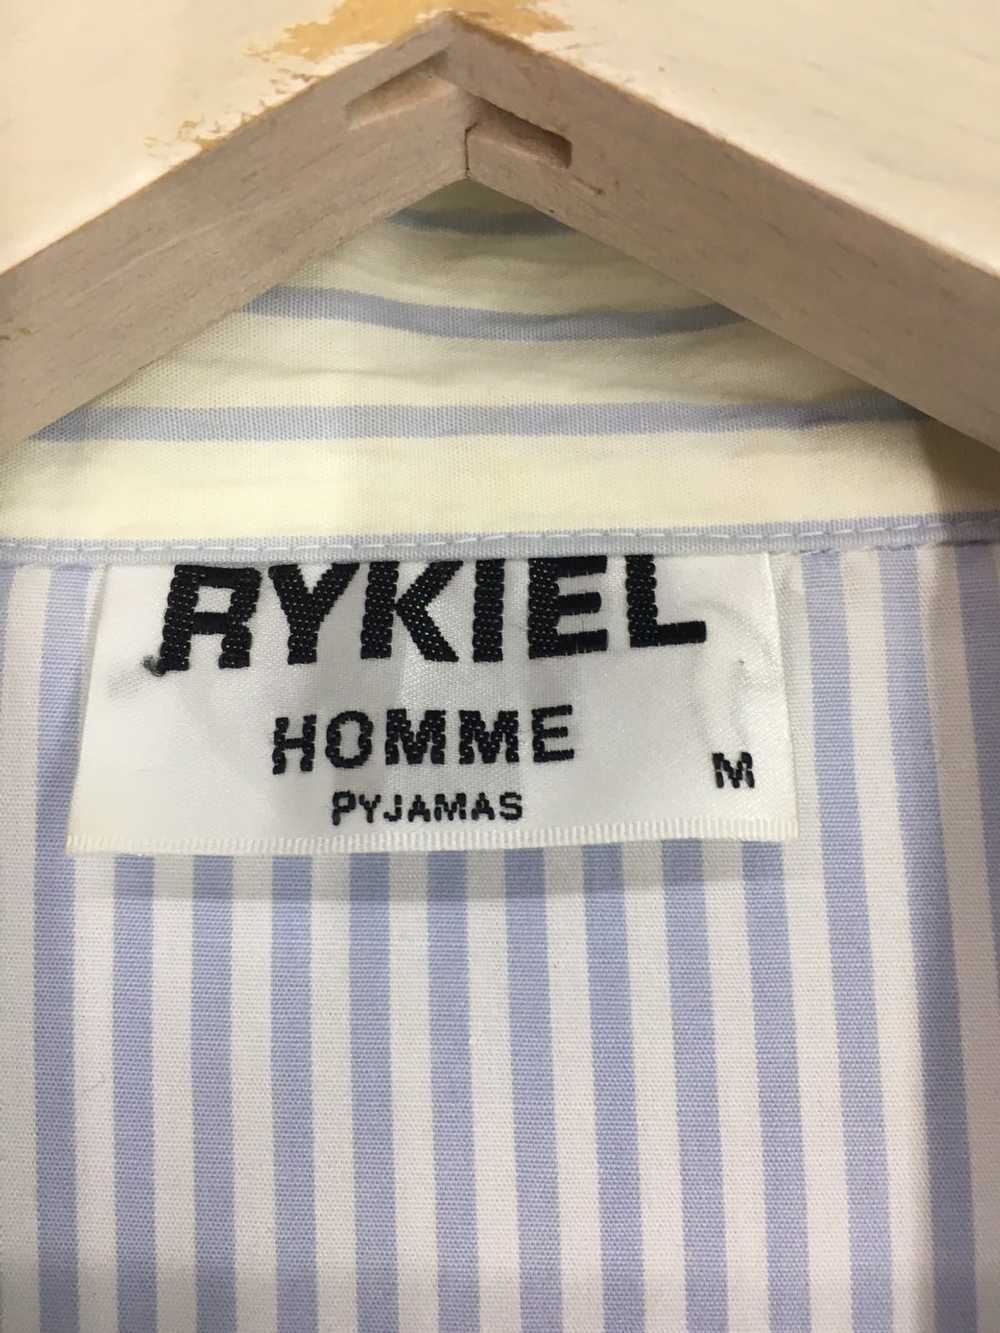 Rykiel Homme Rykiel Homme pyjamas - image 5